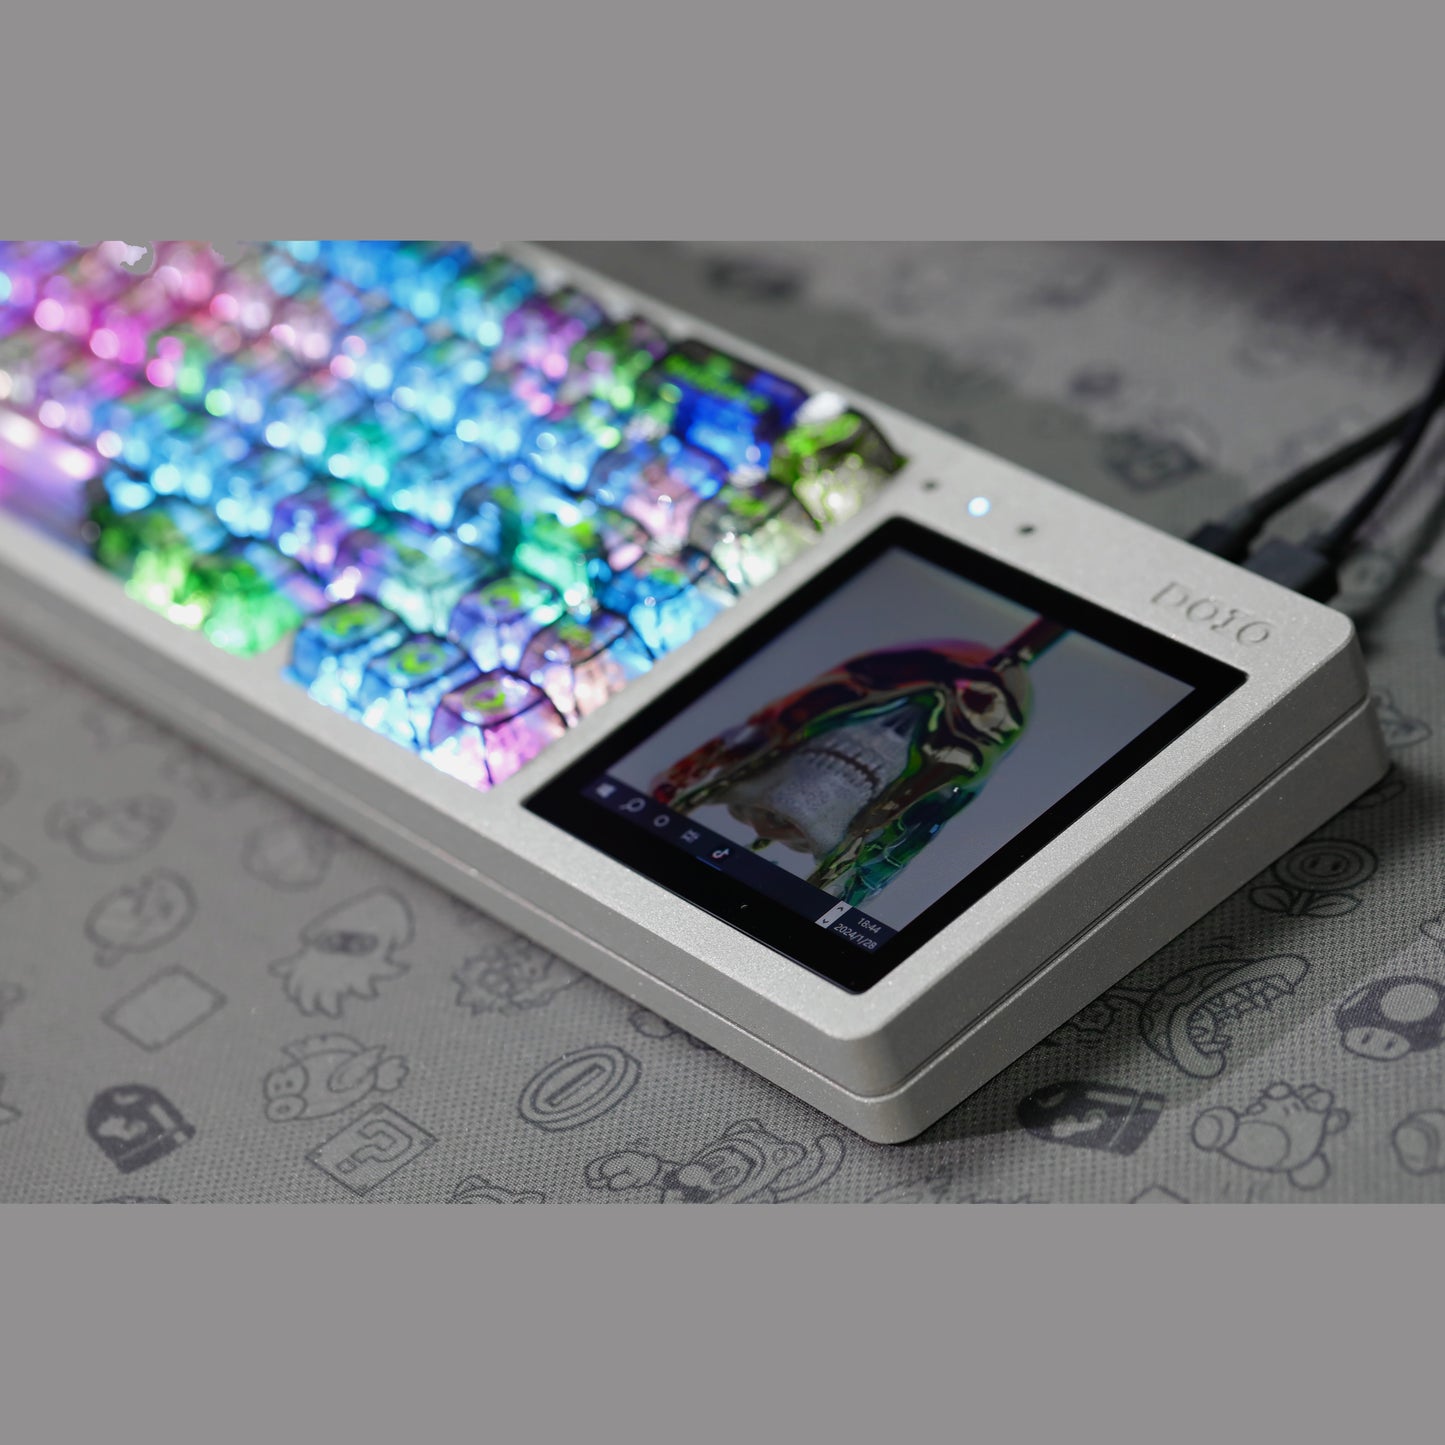 [New] DOIO67 Aluminum Mechanical Keyboard Barebone with OLED Touch Screen